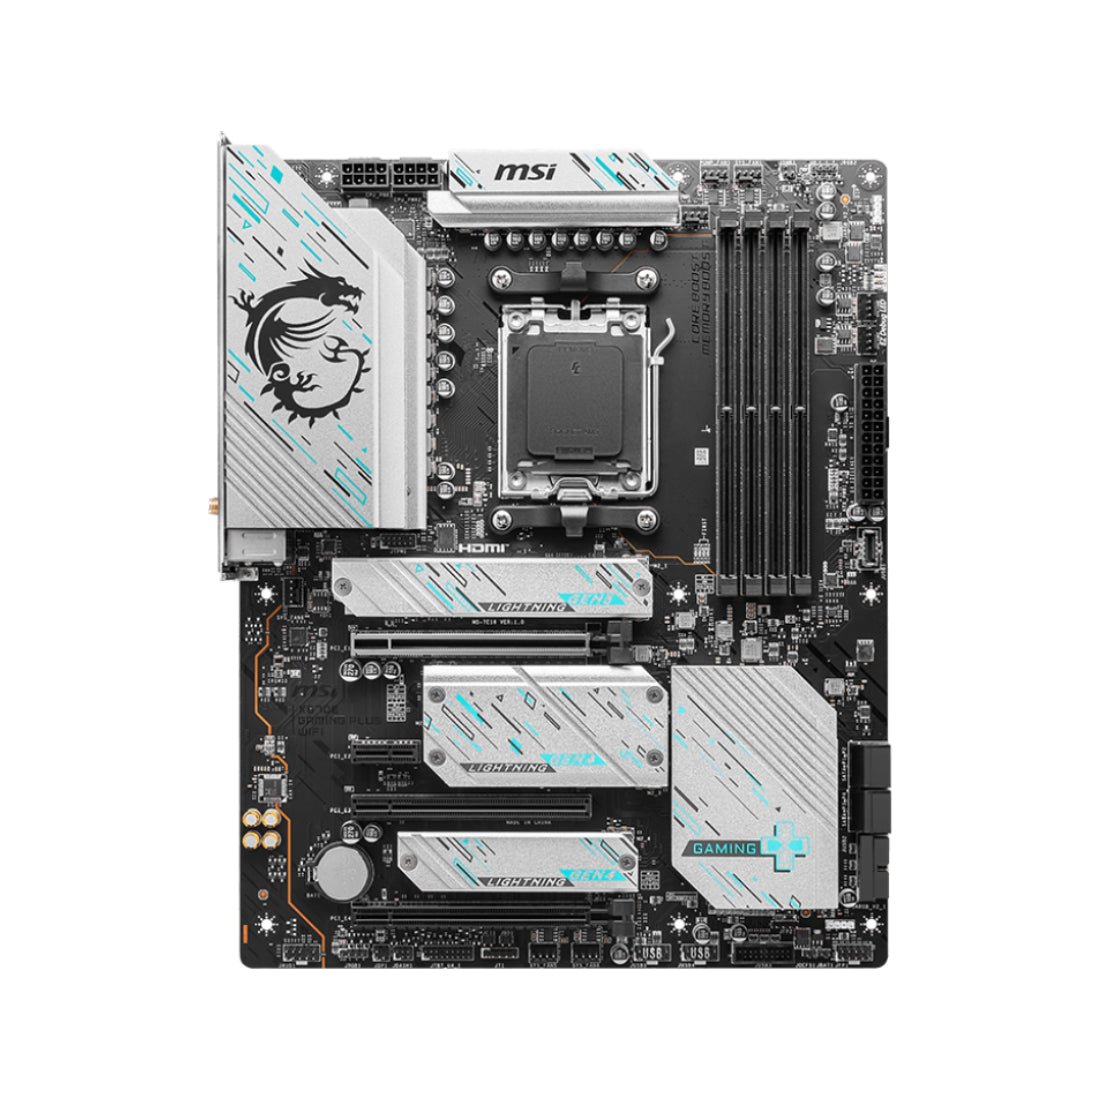 MSI X670E Gaming Plus WIFI DDR5 AM5 AMD ATX Gaming Motherboard - اللوحة الأم - Store 974 | ستور ٩٧٤